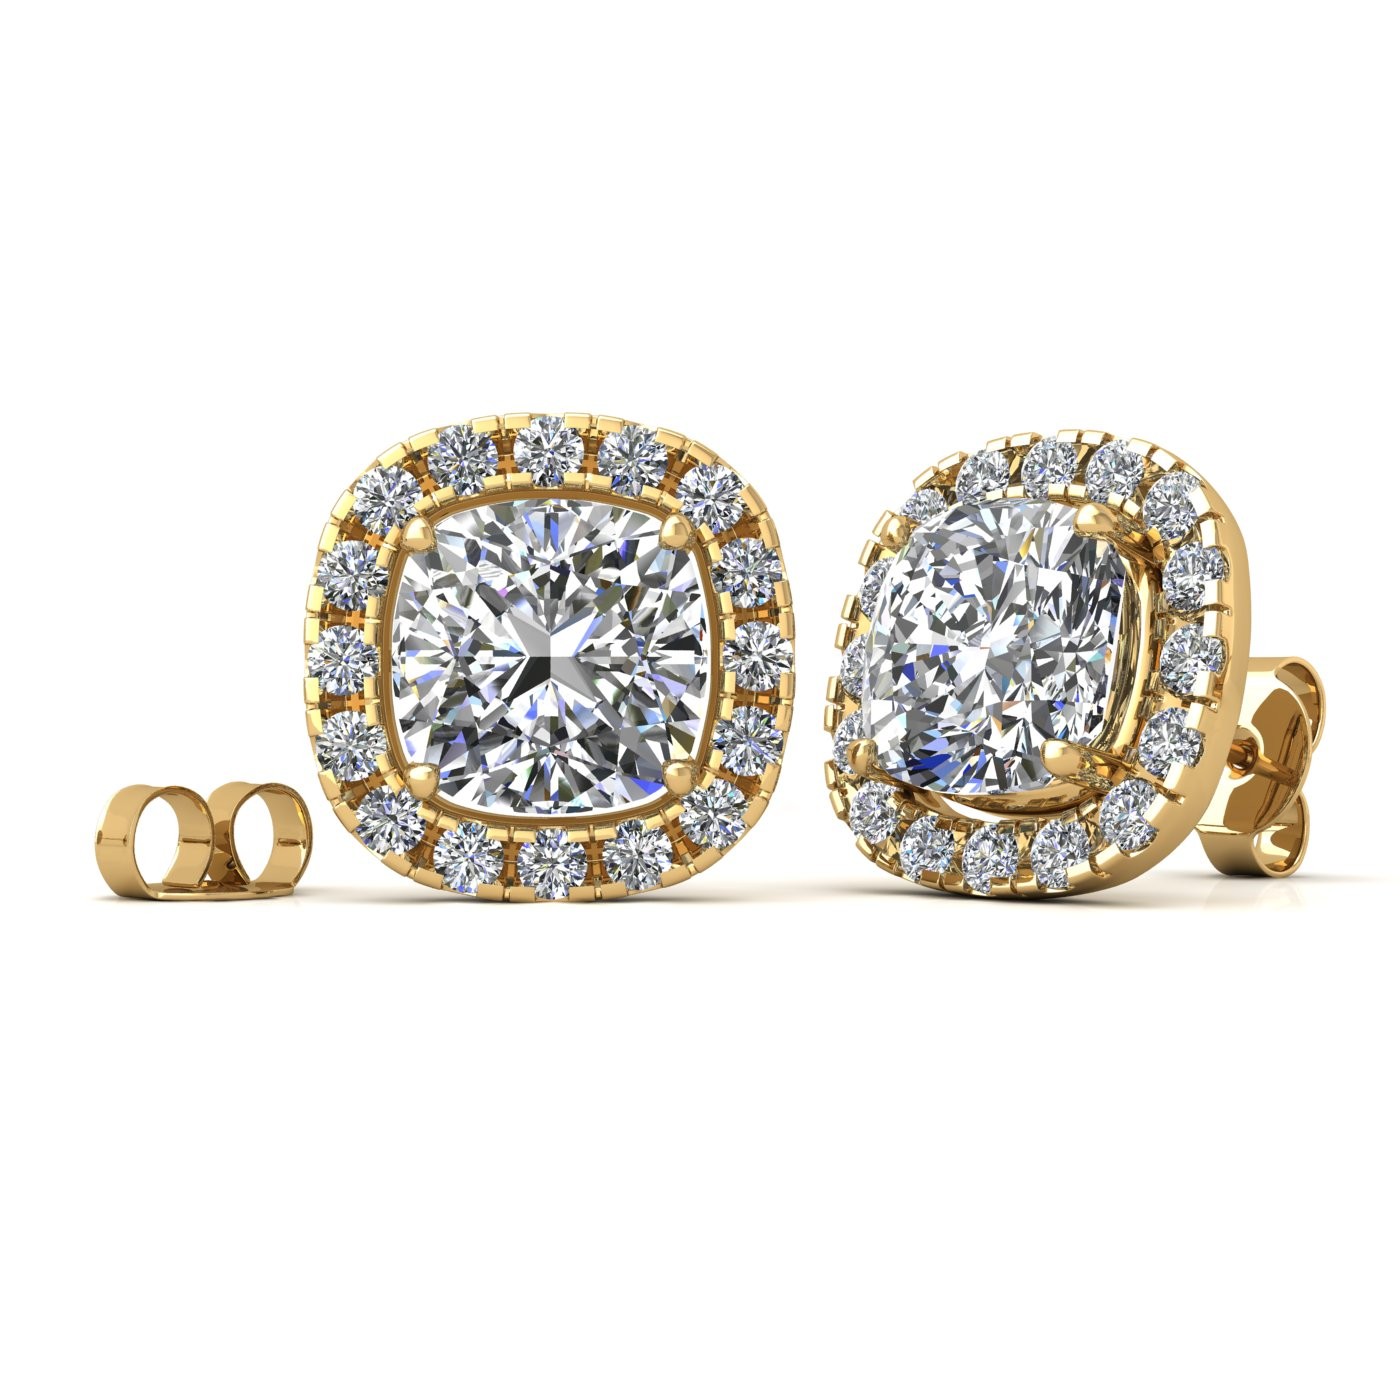 18k yellow gold  0,5 ct each (1,0 tcw) 4 prongs cushion shape diamond earrings with diamond pavÉ set halo Photos & images